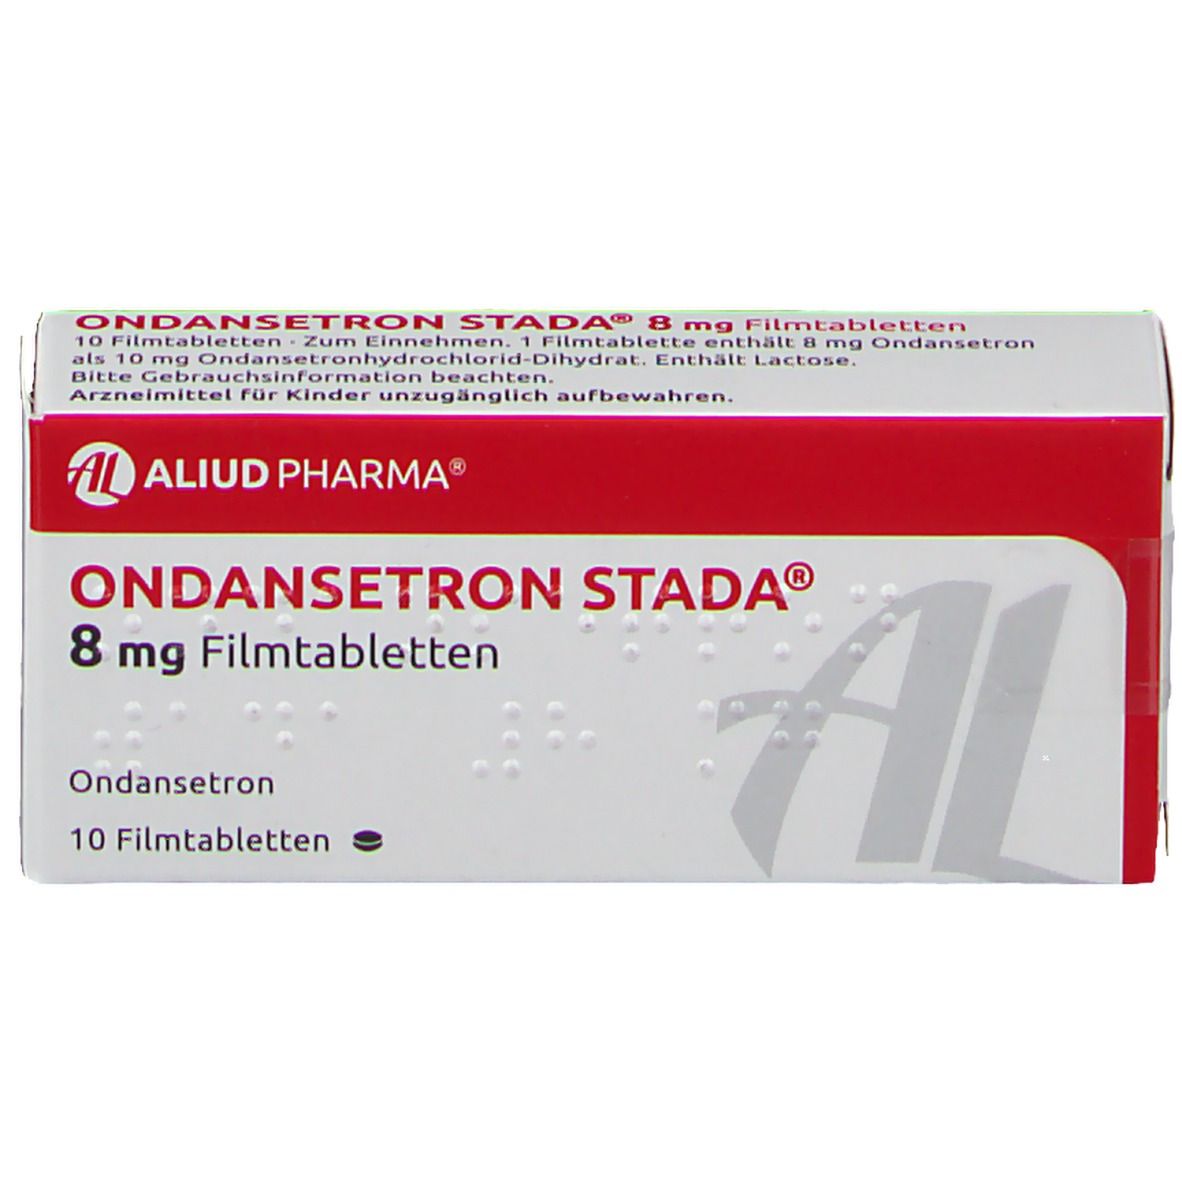 Ondansetron STADA® 8 mg